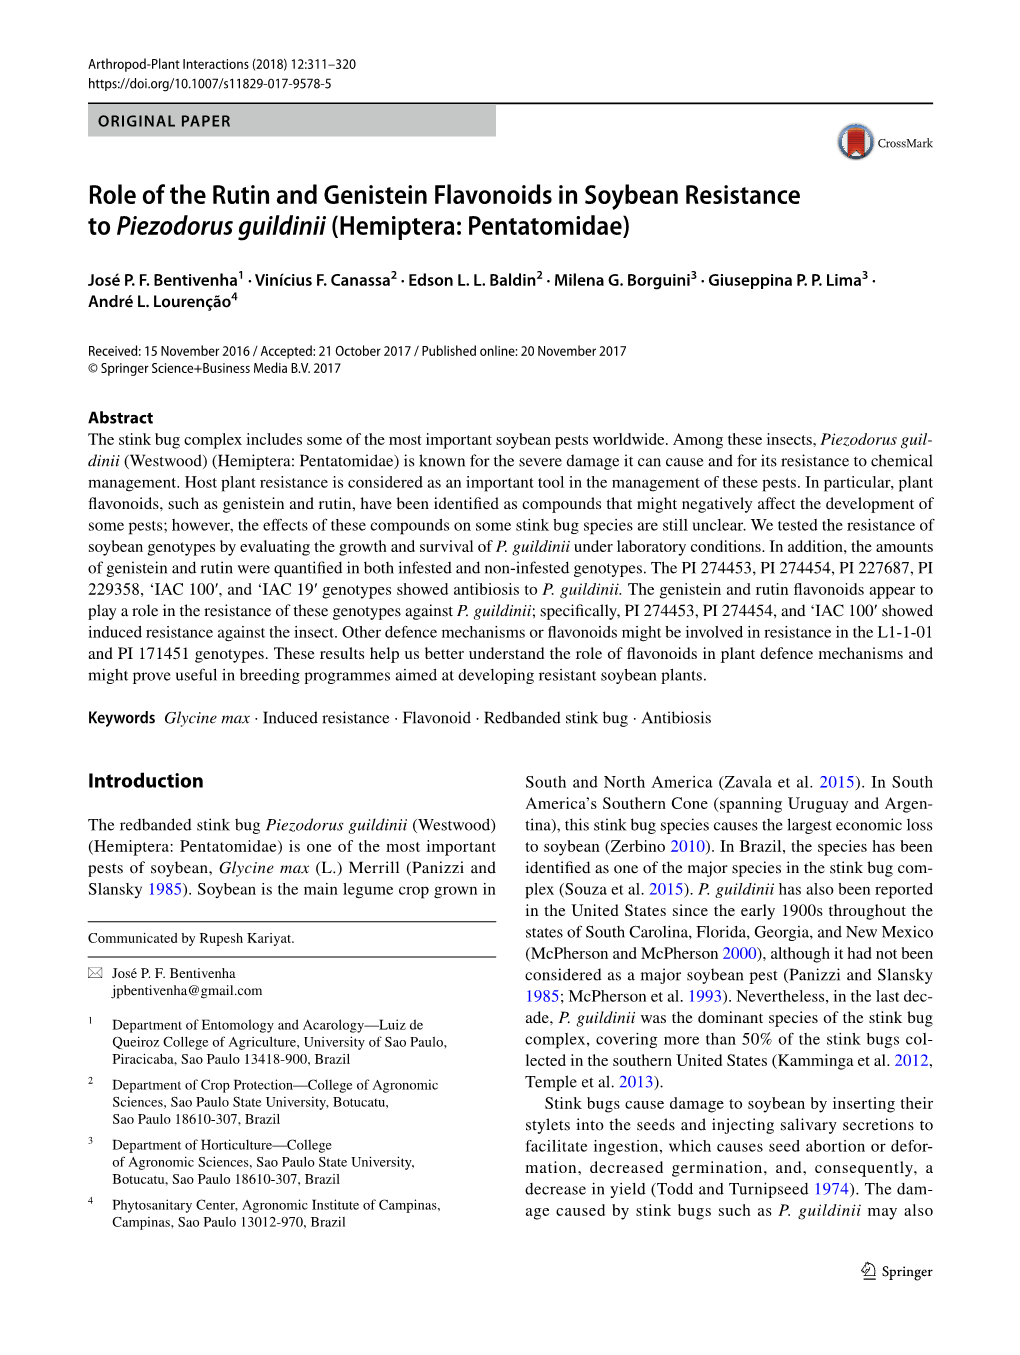 Role of the Rutin and Genistein Flavonoids in Soybean Resistance to Piezodorus Guildinii (Hemiptera: Pentatomidae)